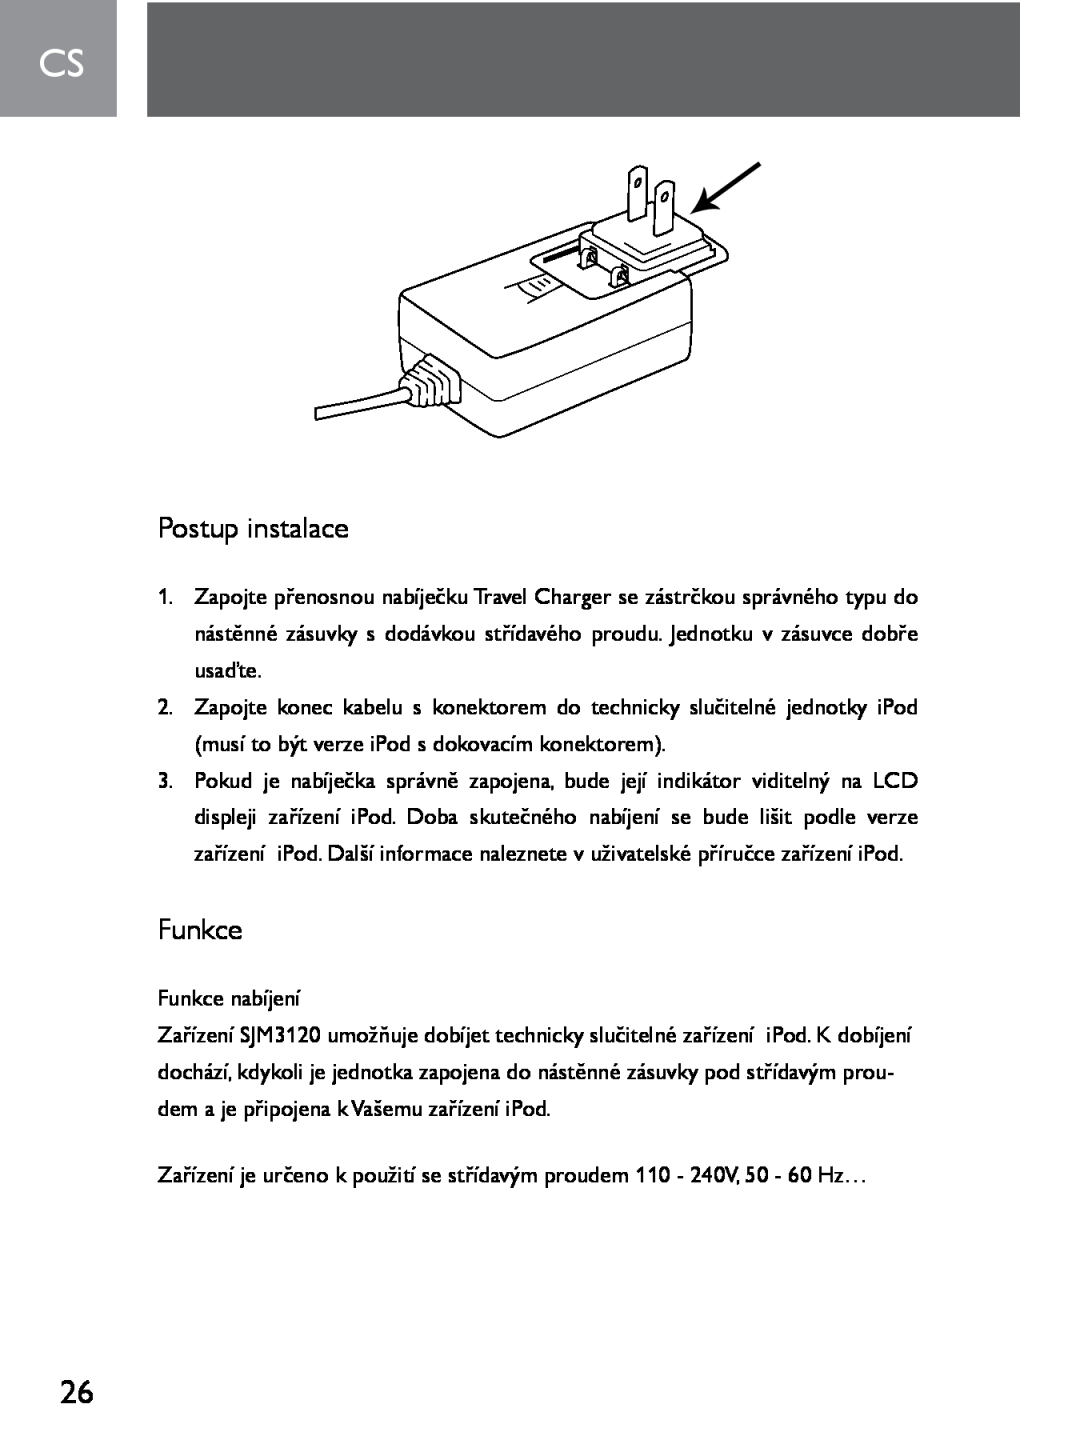 Philips SJM3120 user manual Postup instalace, Funkce 